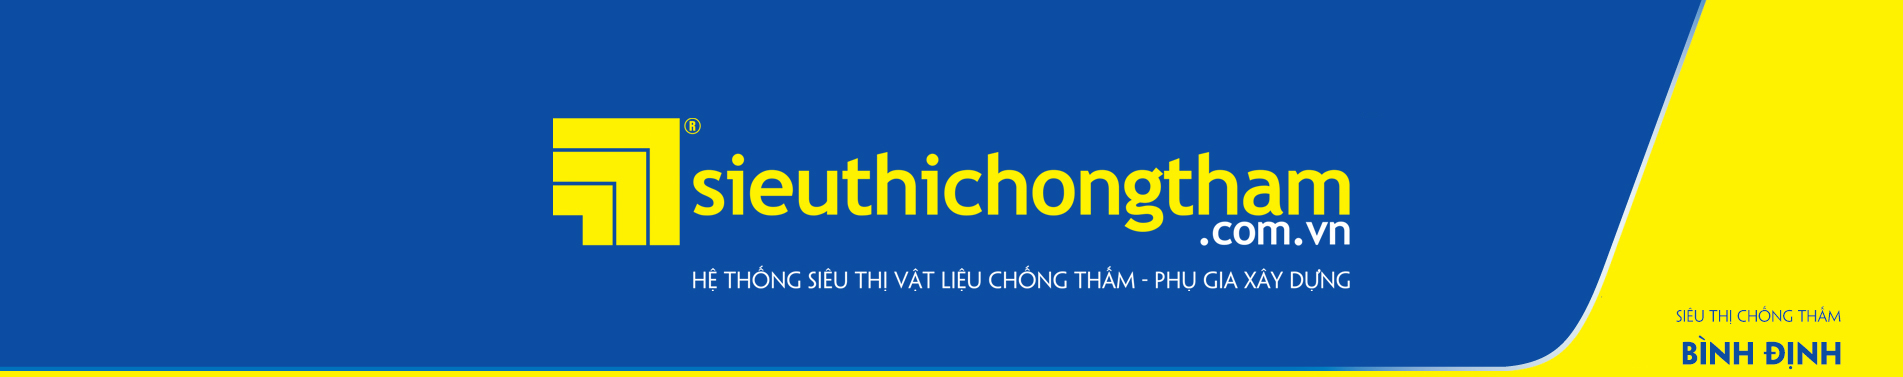 Sieu Thi Chong Tham Binh Dinh